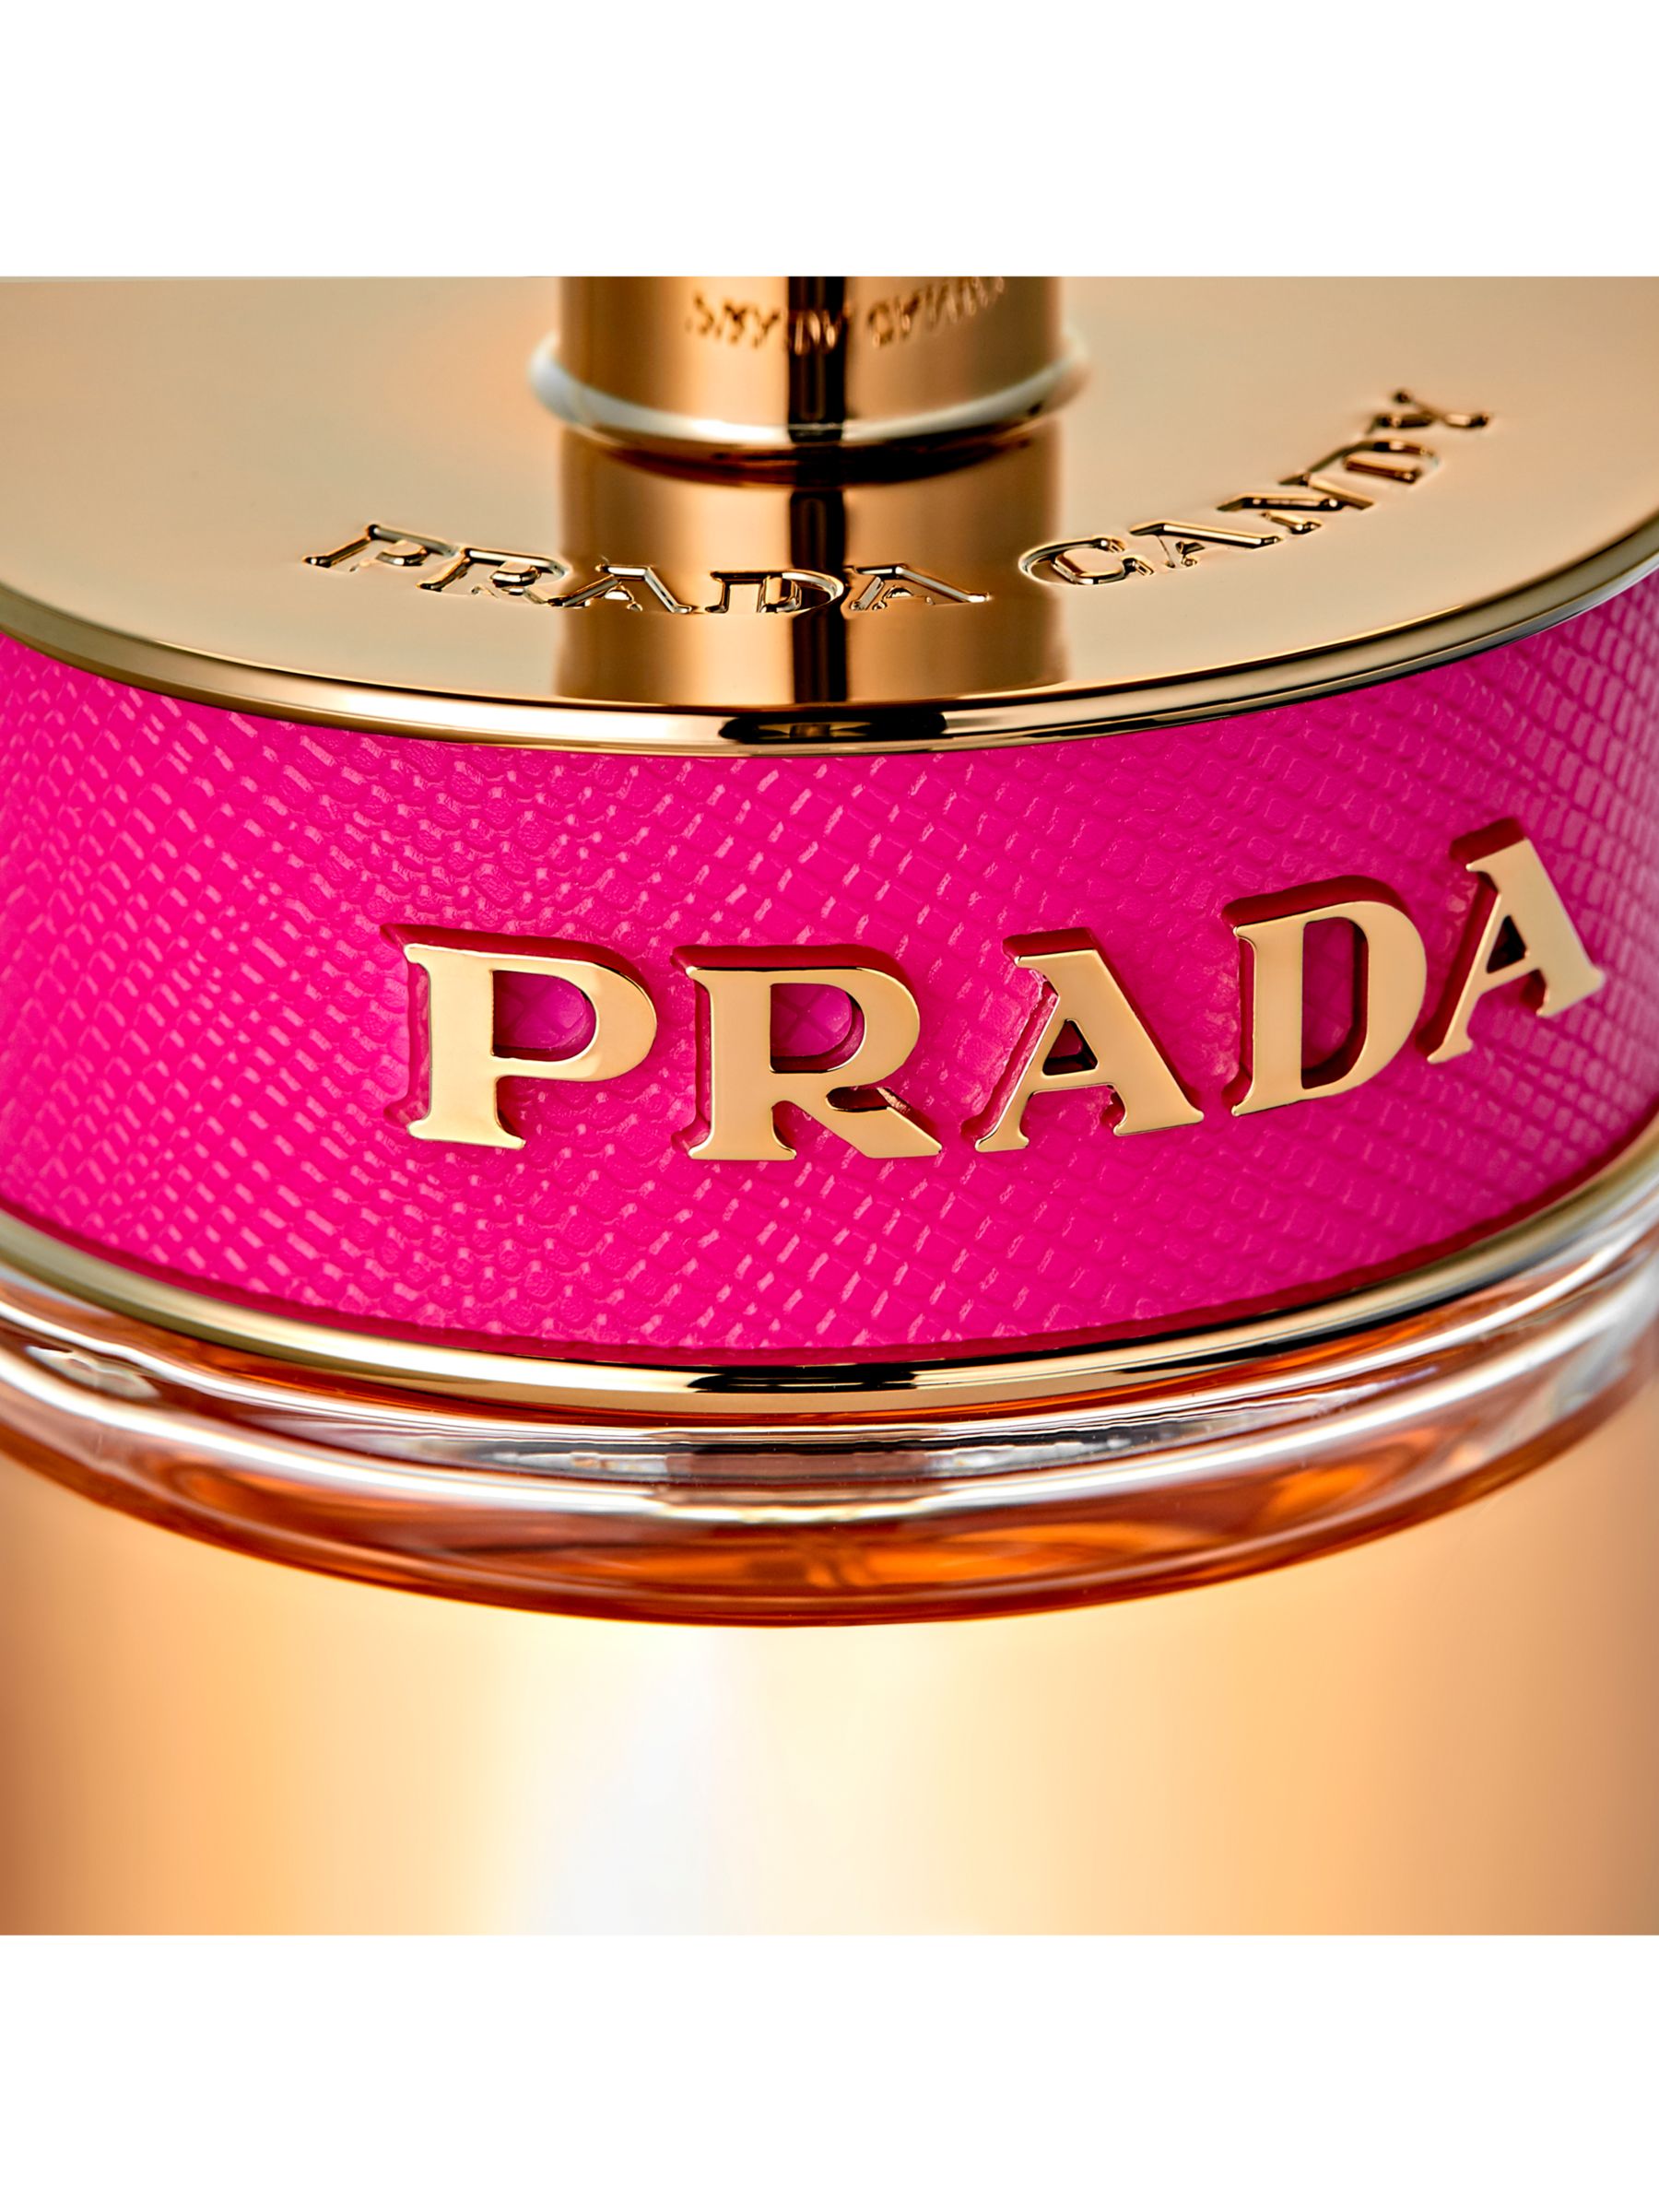 Prada Candy Eau de Parfum, 30ml at John Lewis & Partners